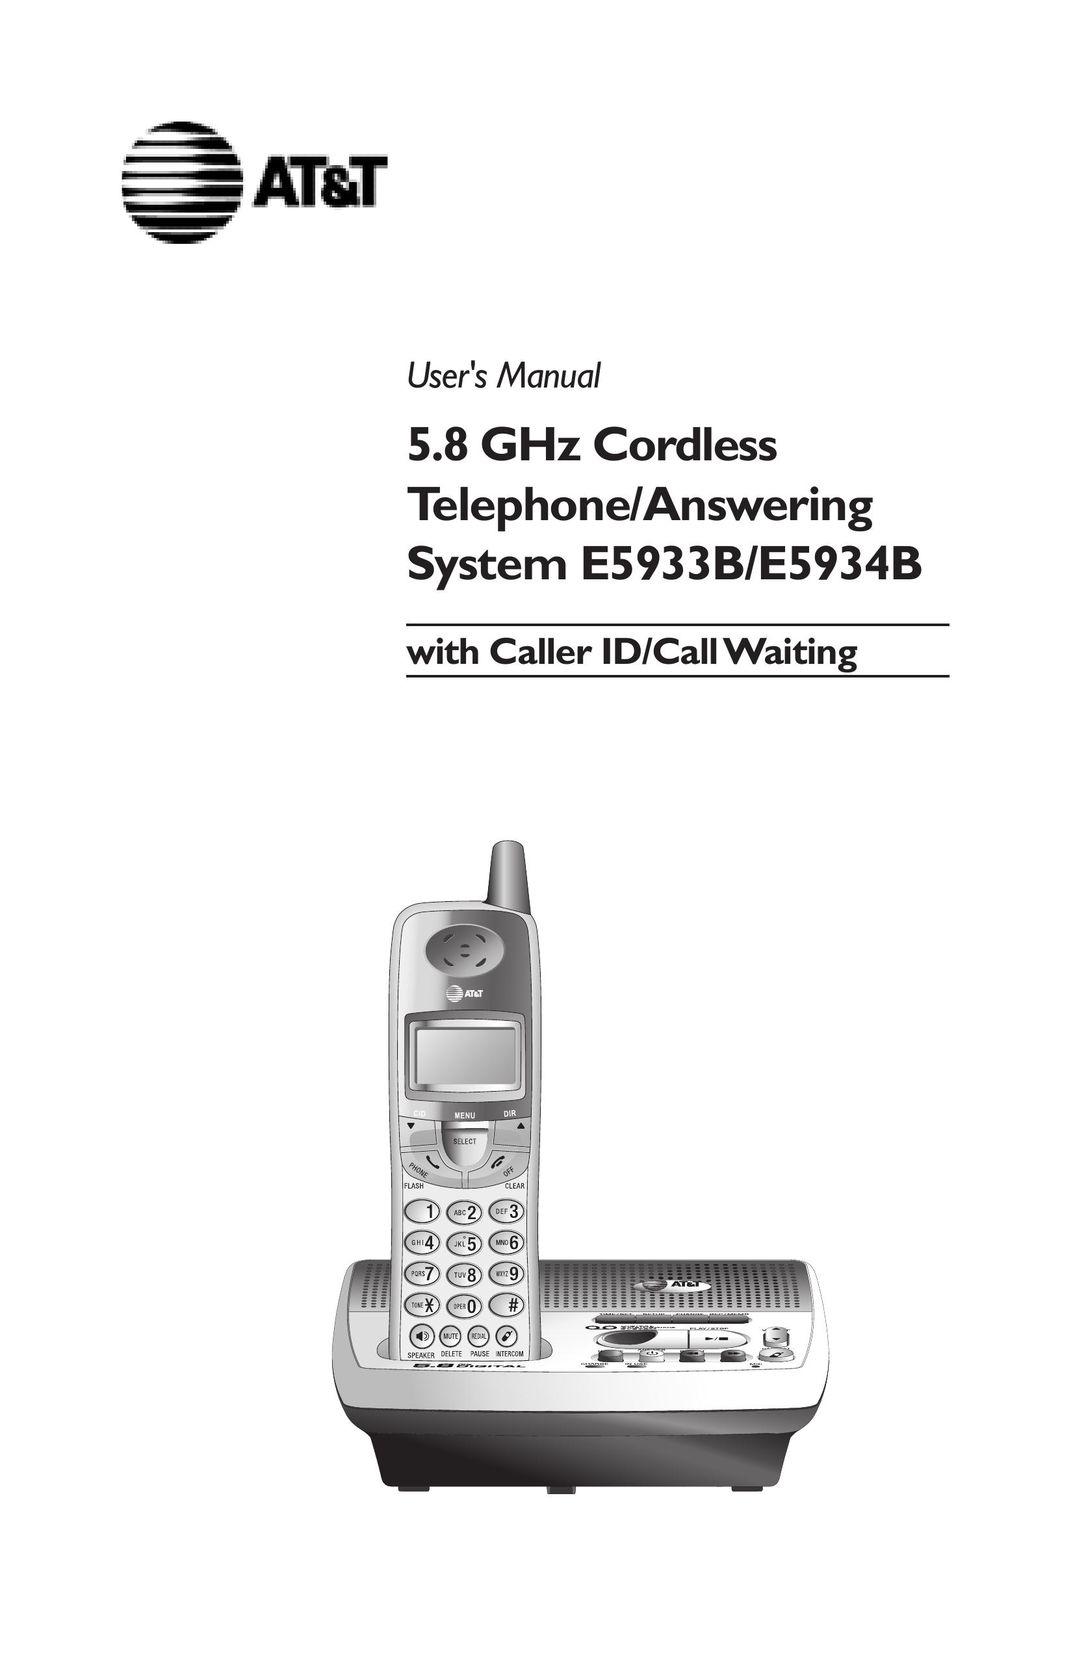 AT&T E5934B Answering Machine User Manual